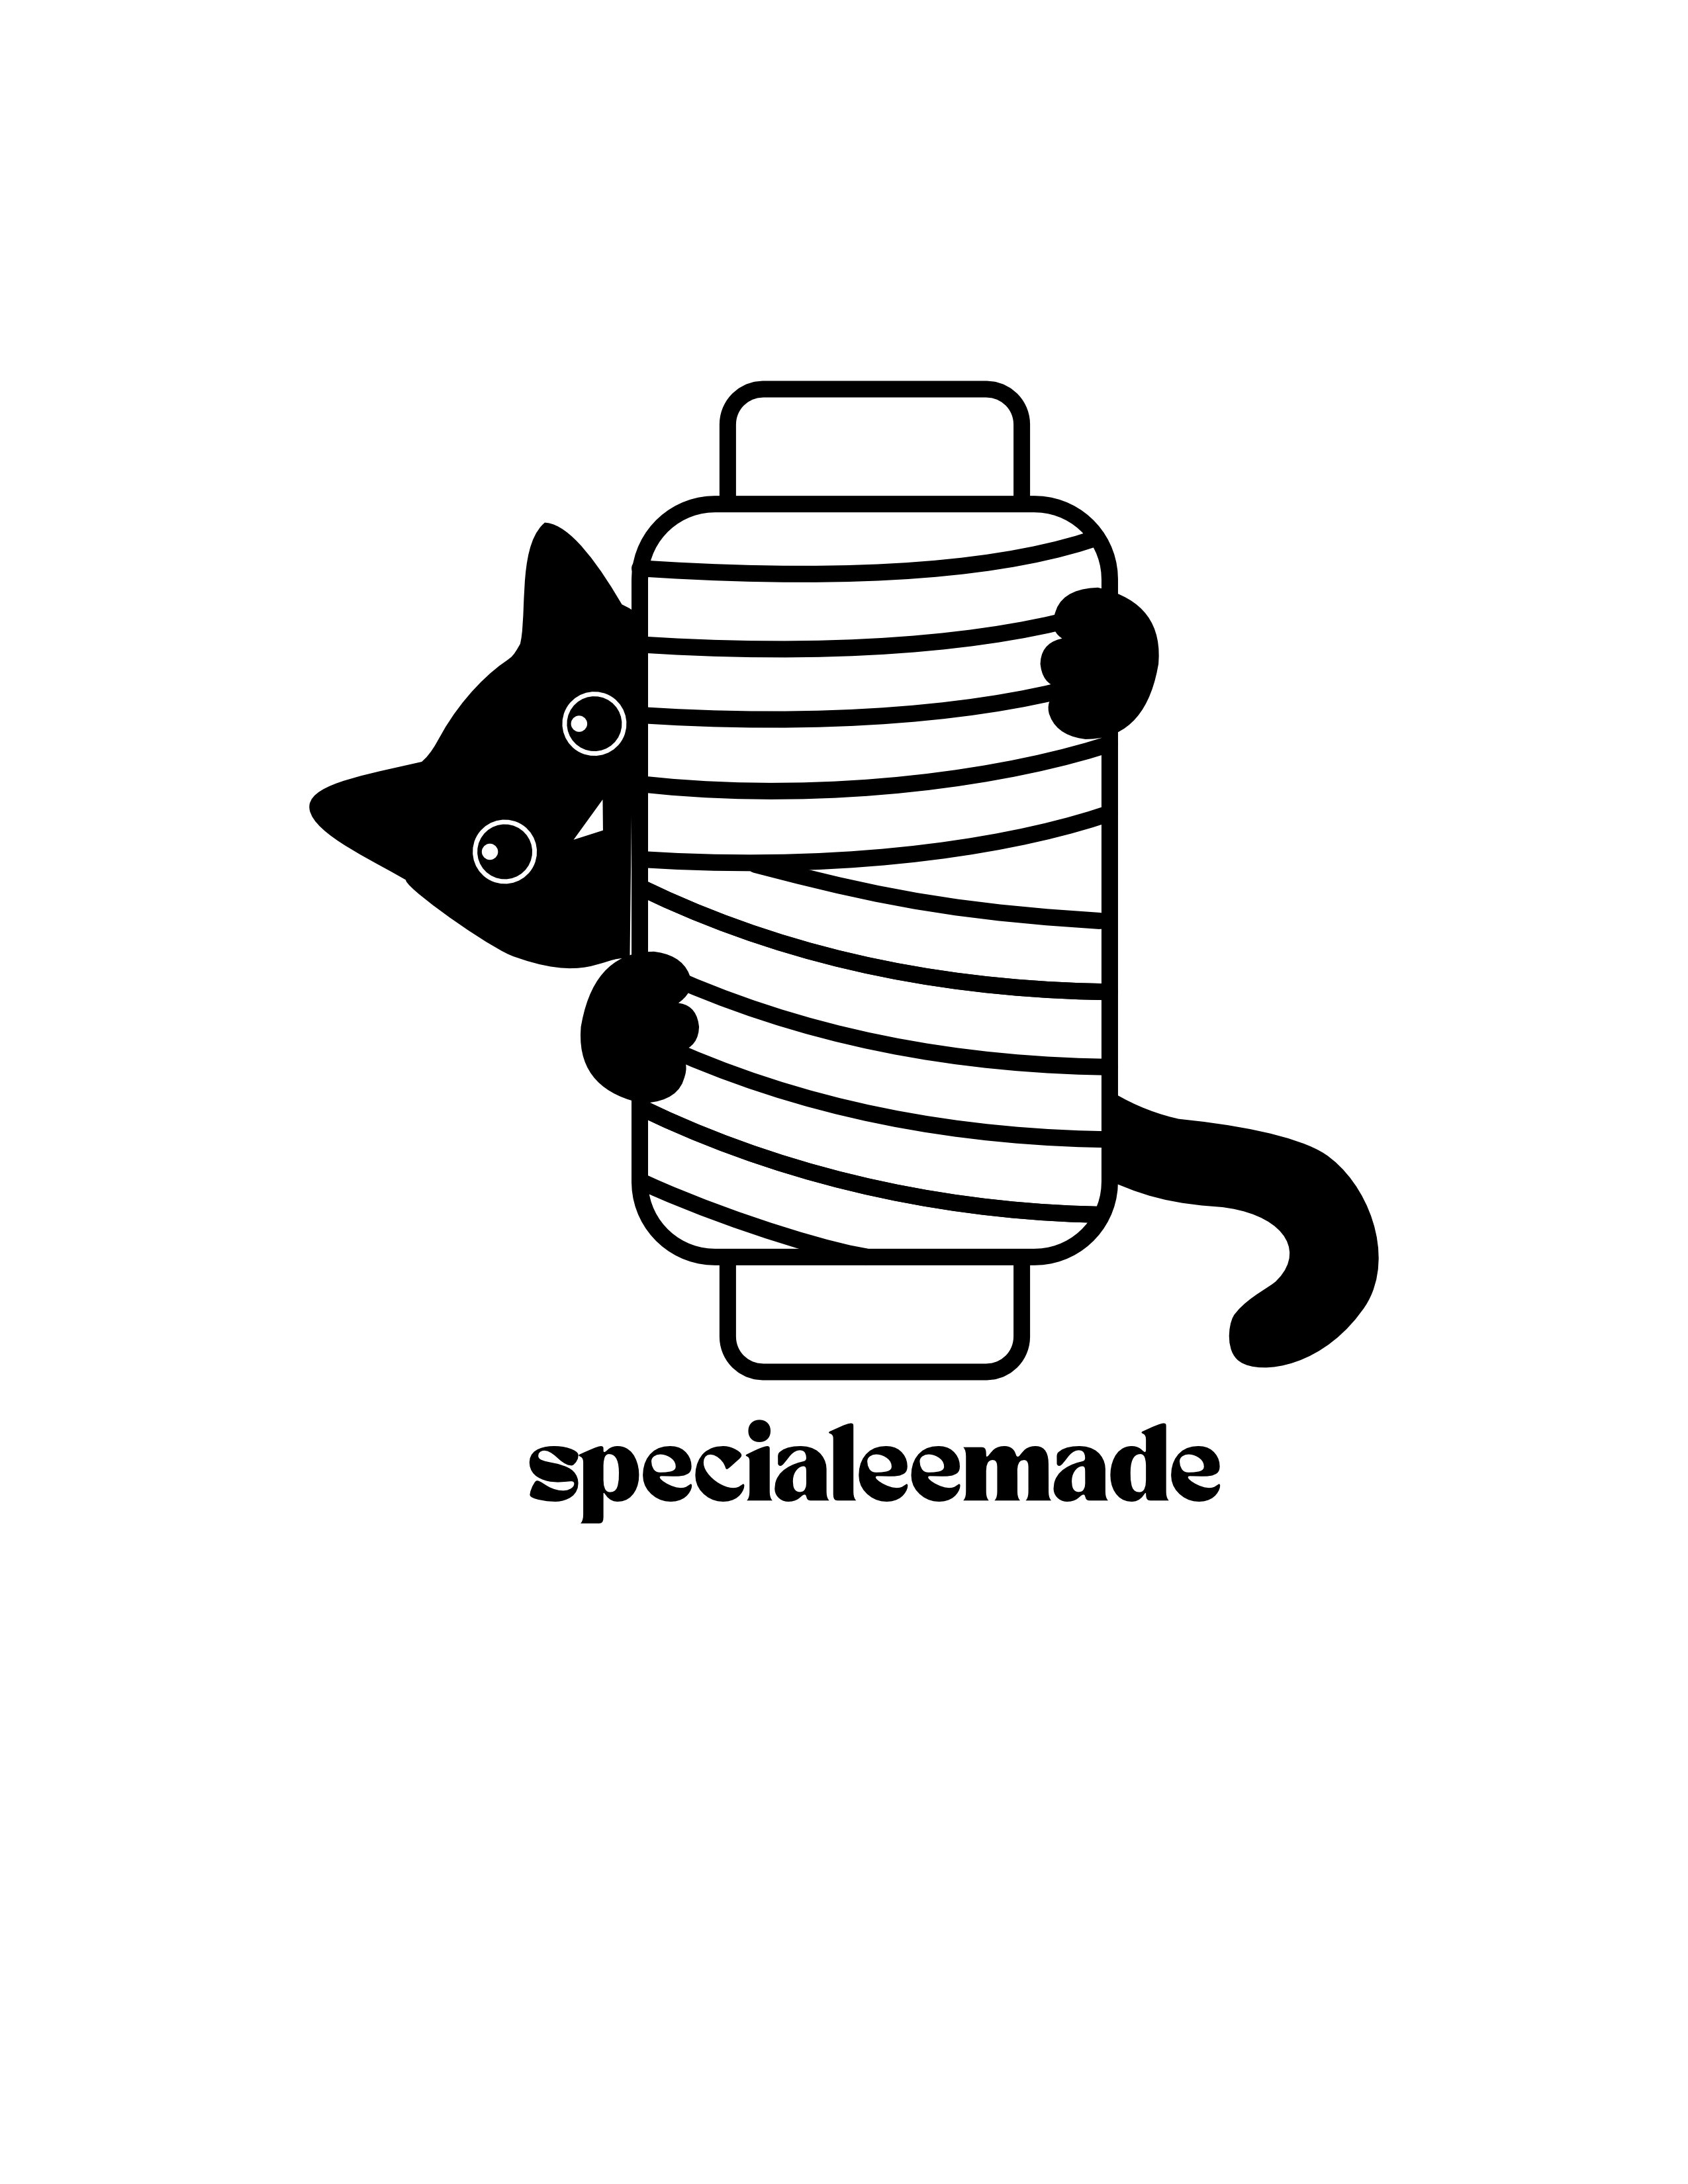 specialeemade cat logo